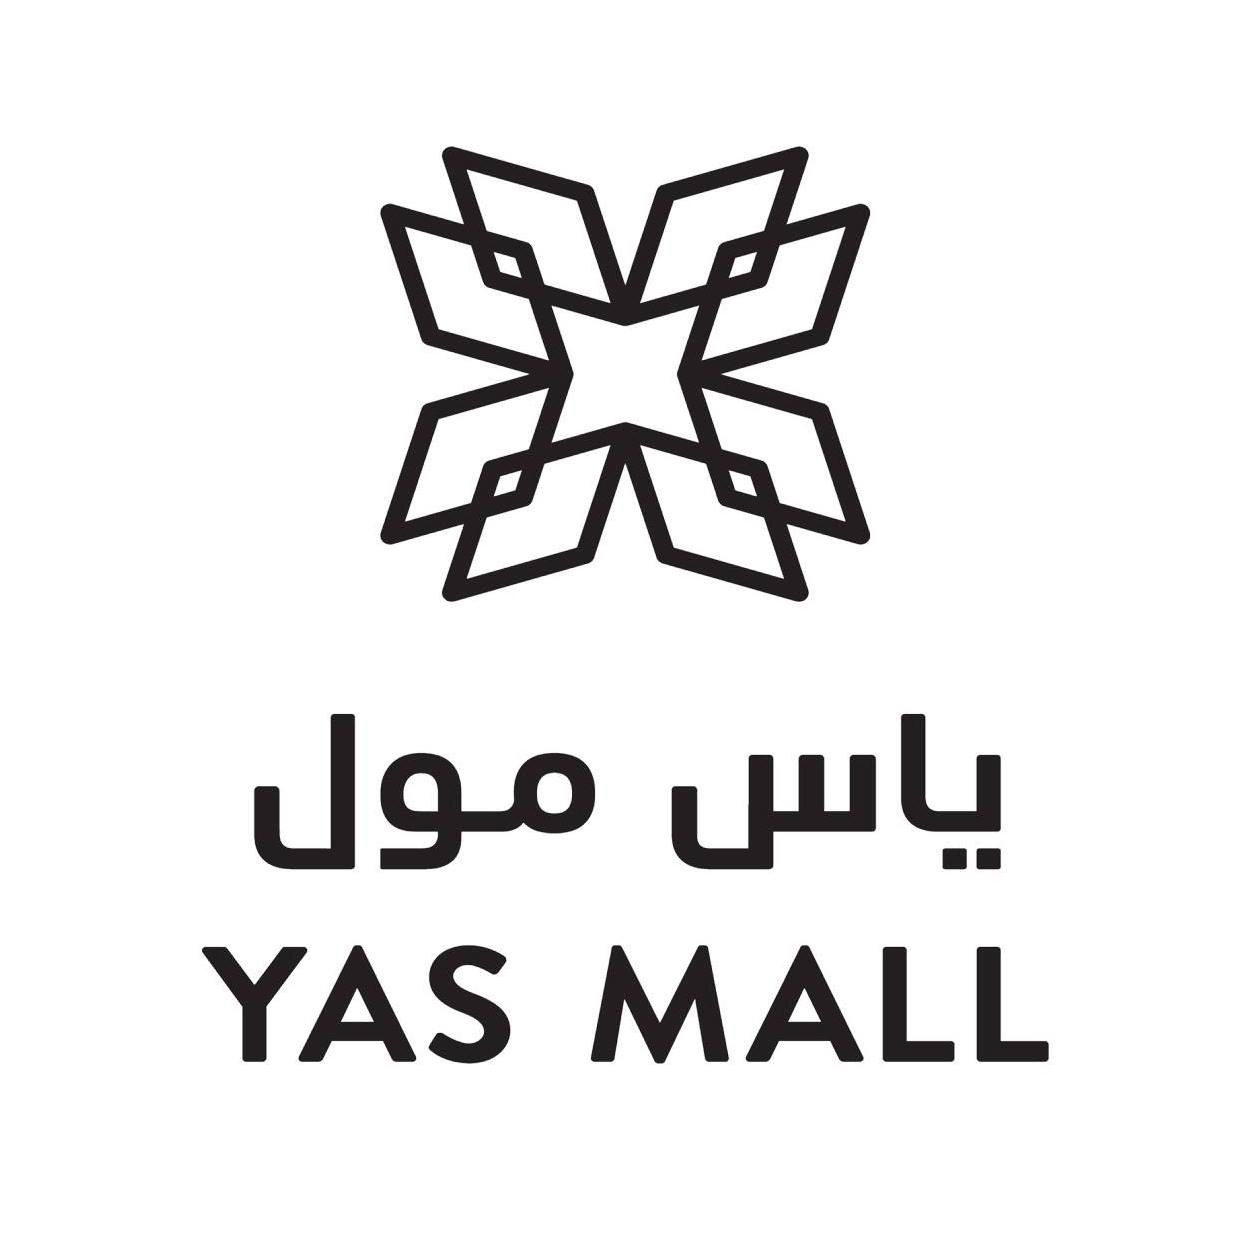 Yas Mall in Yas Island